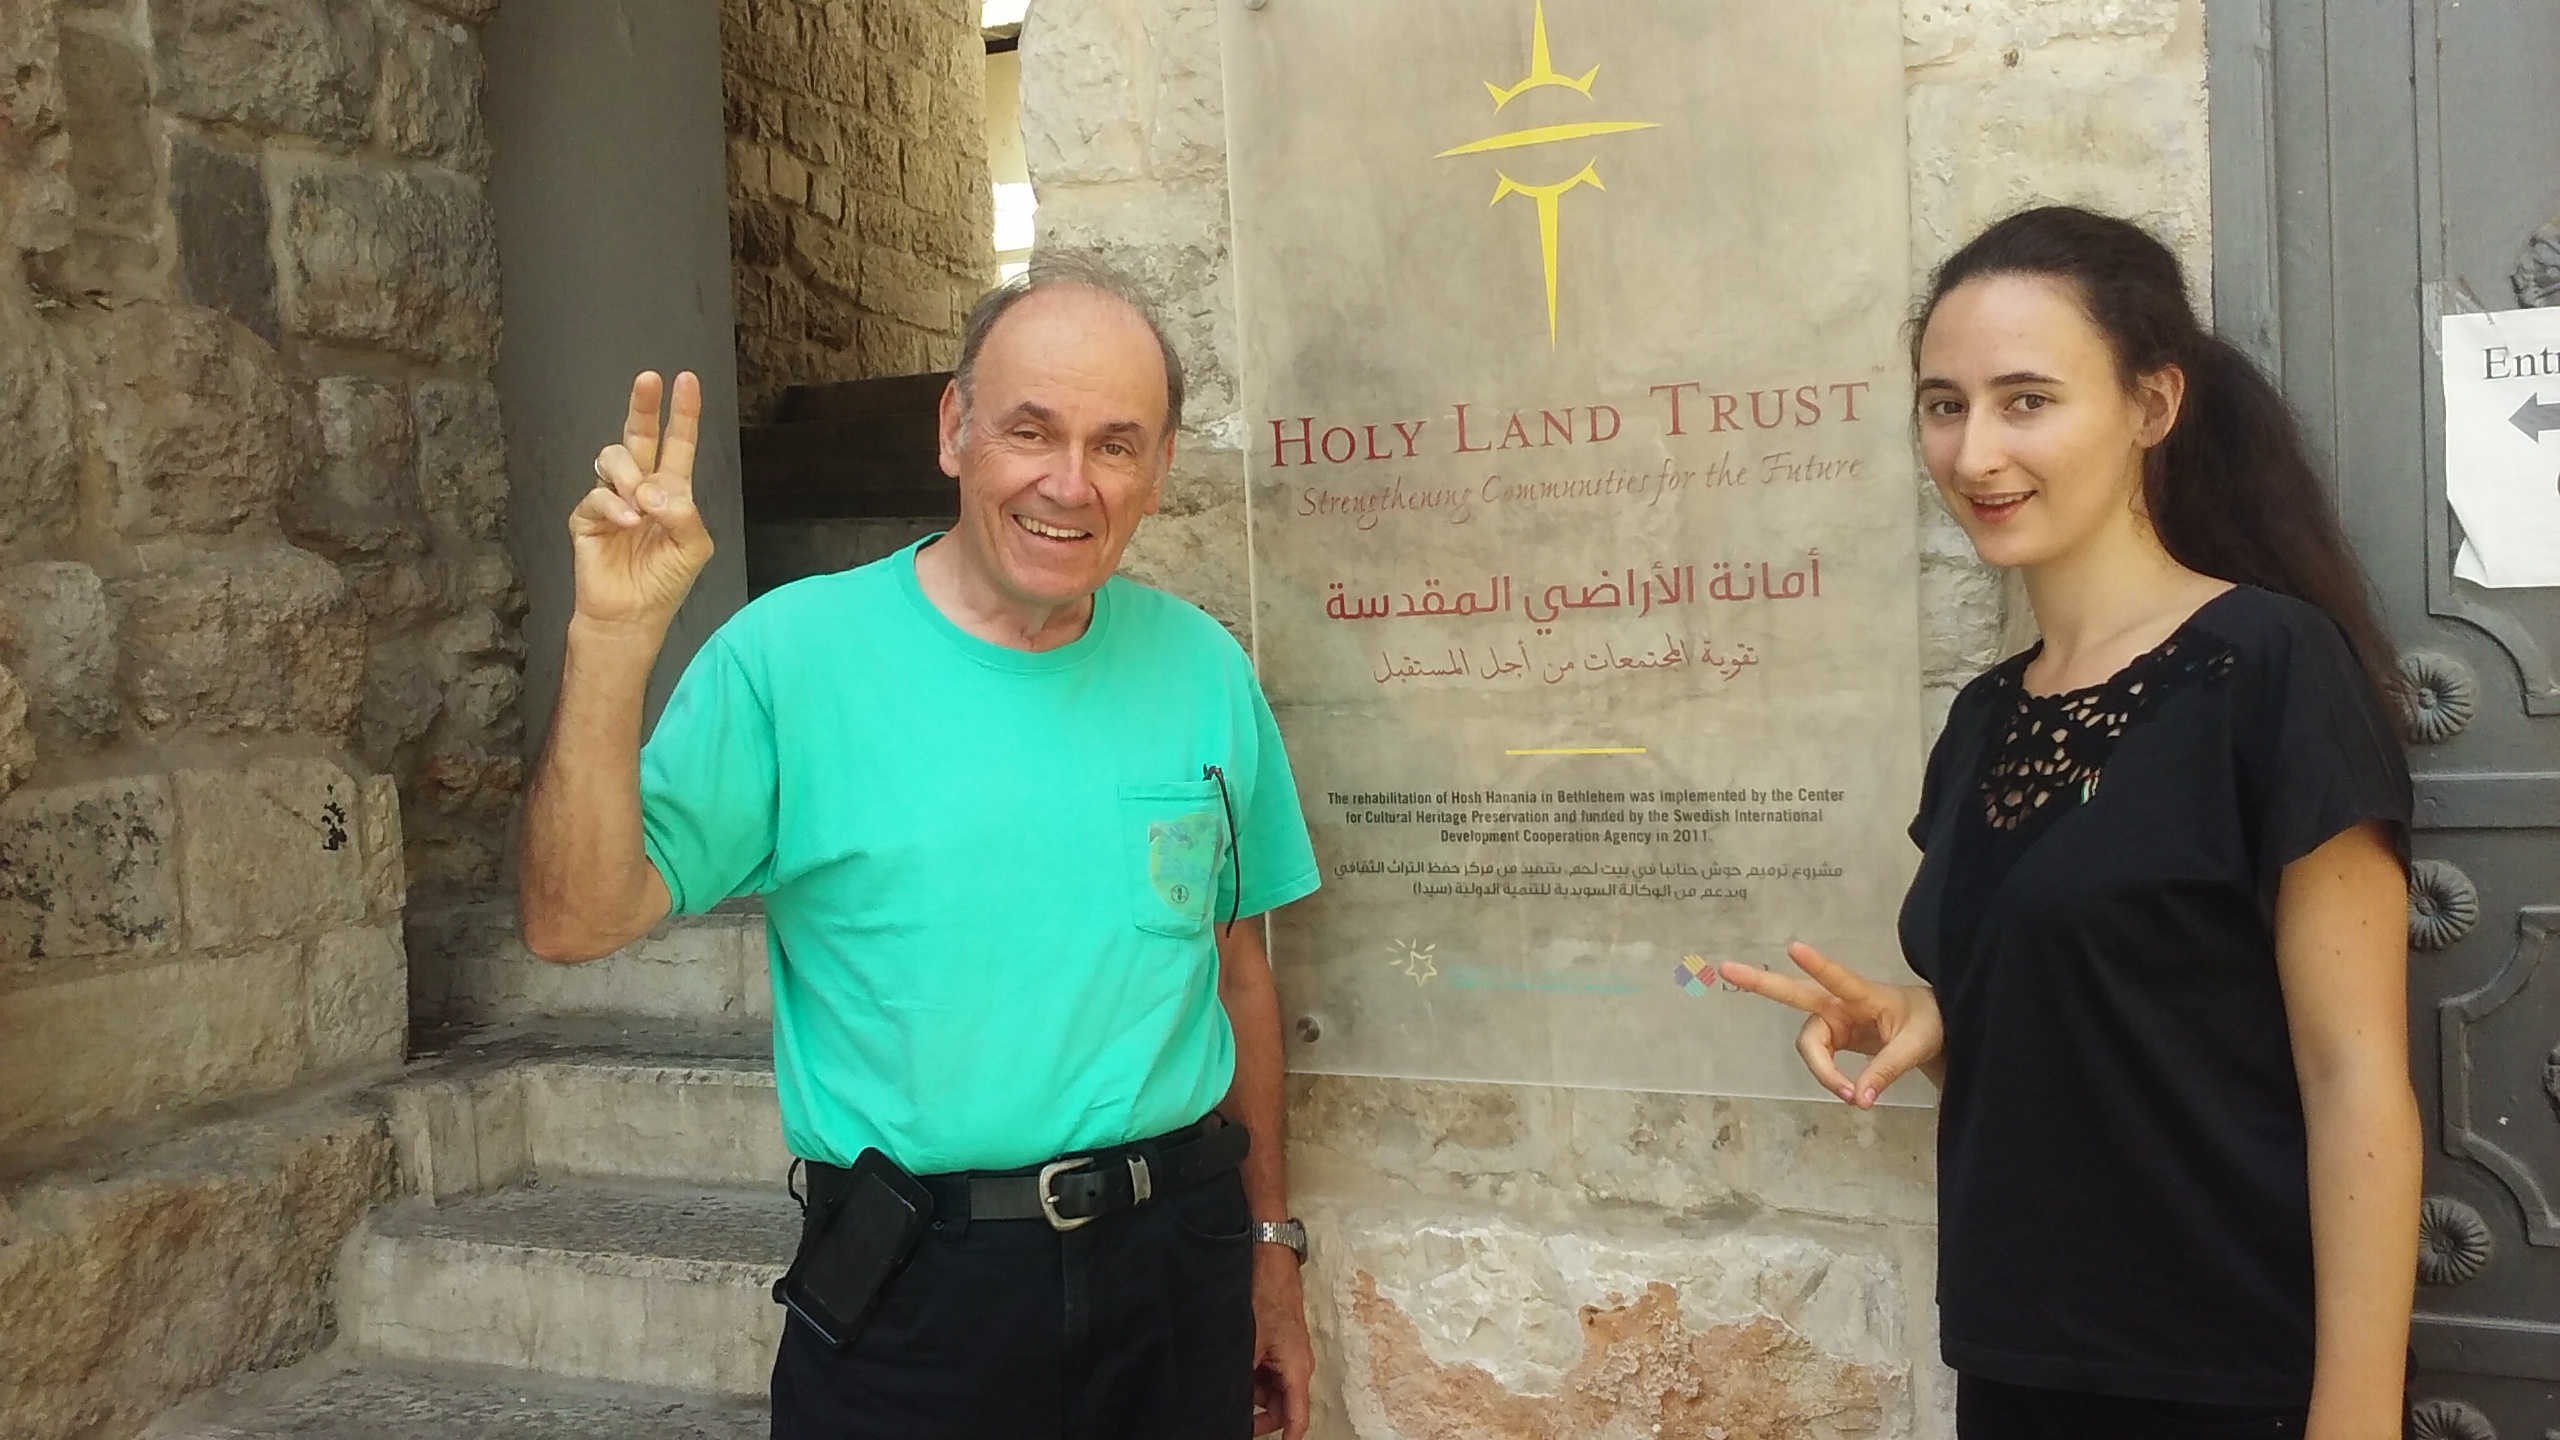 Iktashef: Holy Land Trust Experience in Palestine